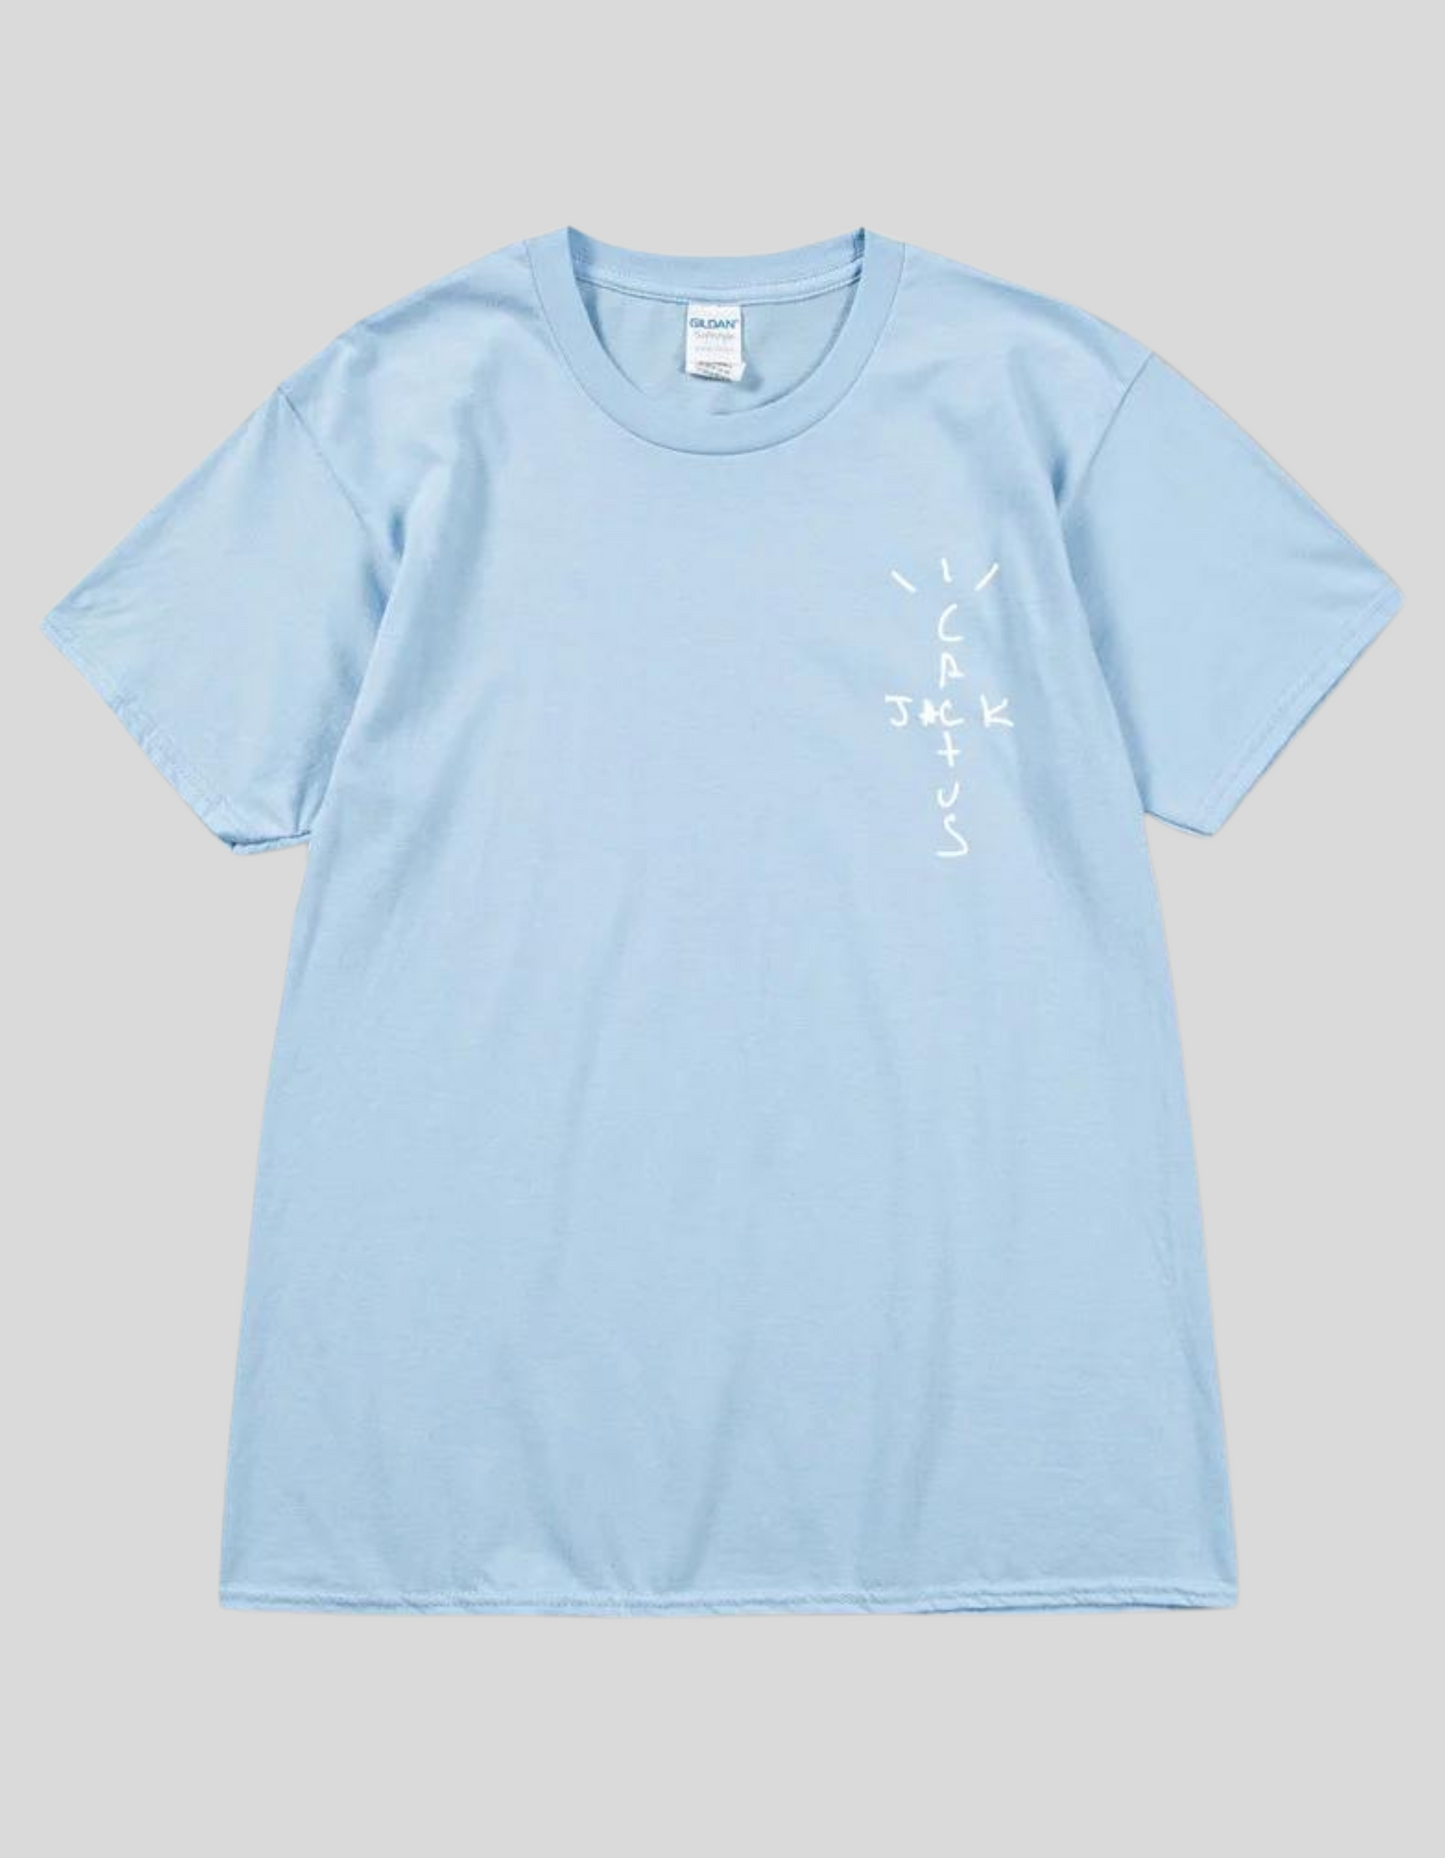 LOOK MOM I CAN FLY ( Travis Scott ) Short Sleeve T-shirts | Grey, Blue